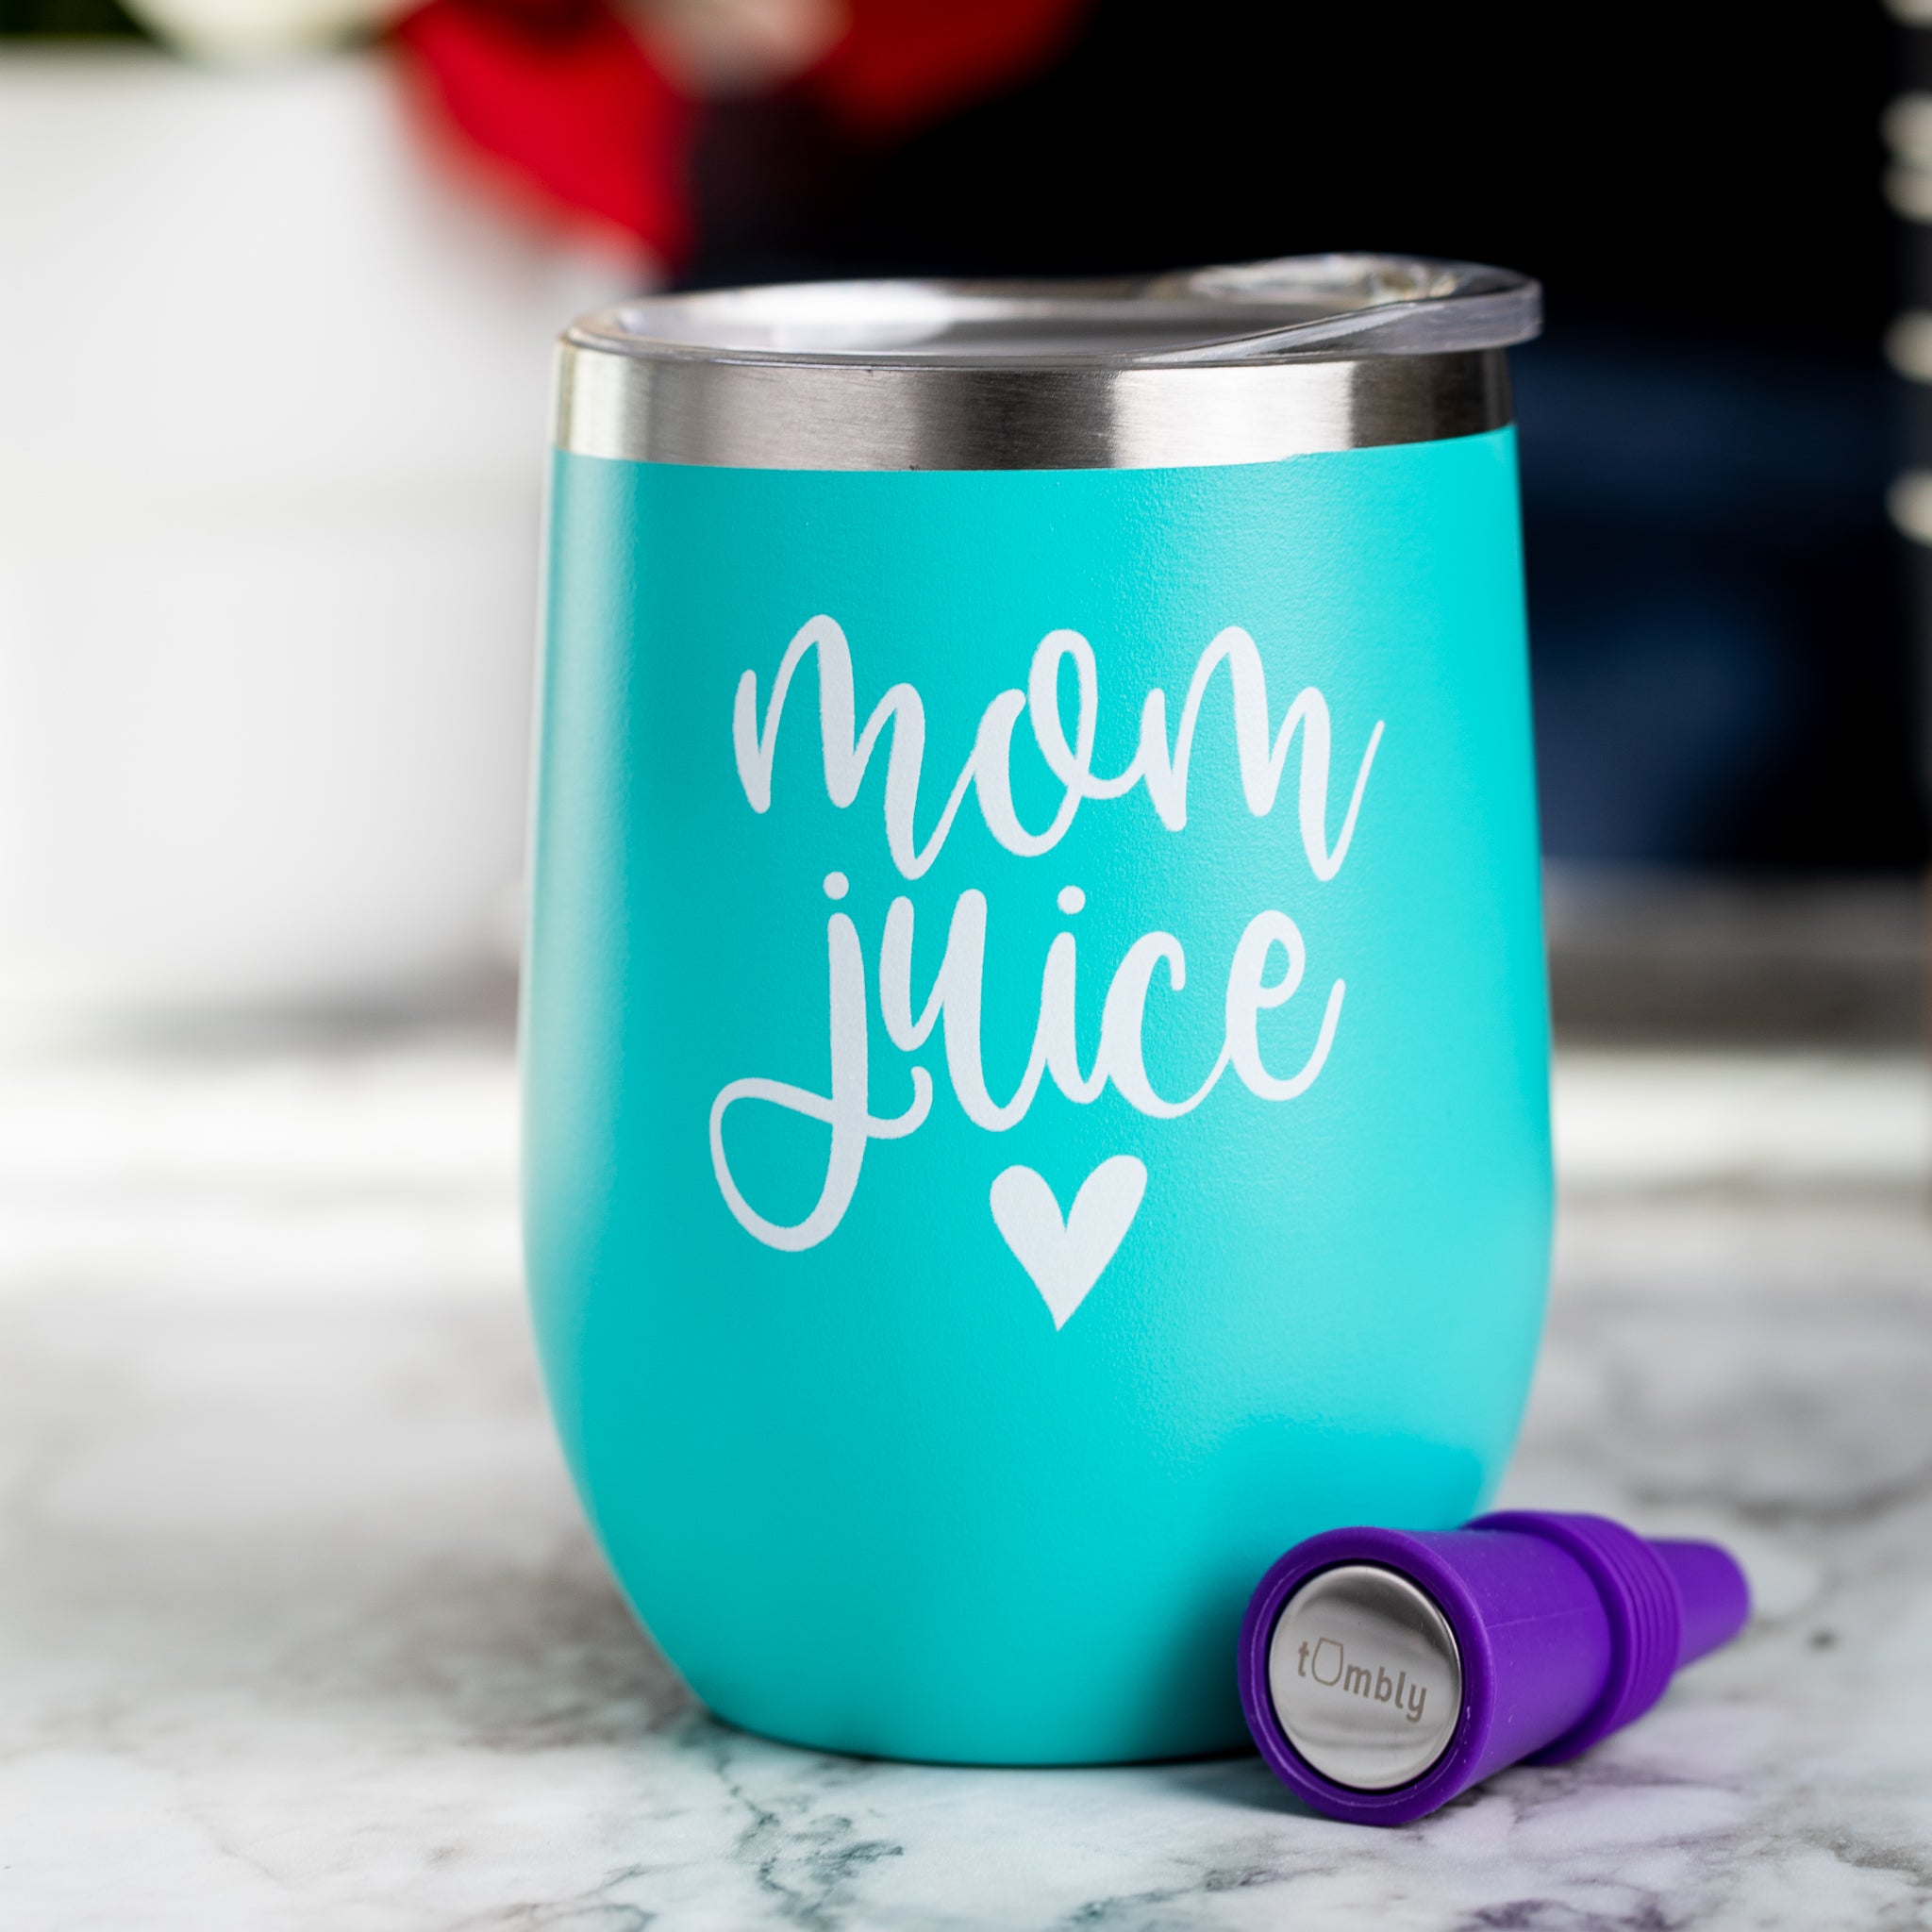 Mommy's Happy Juice Engraved Wine Tumbler - LemonsAreBlue